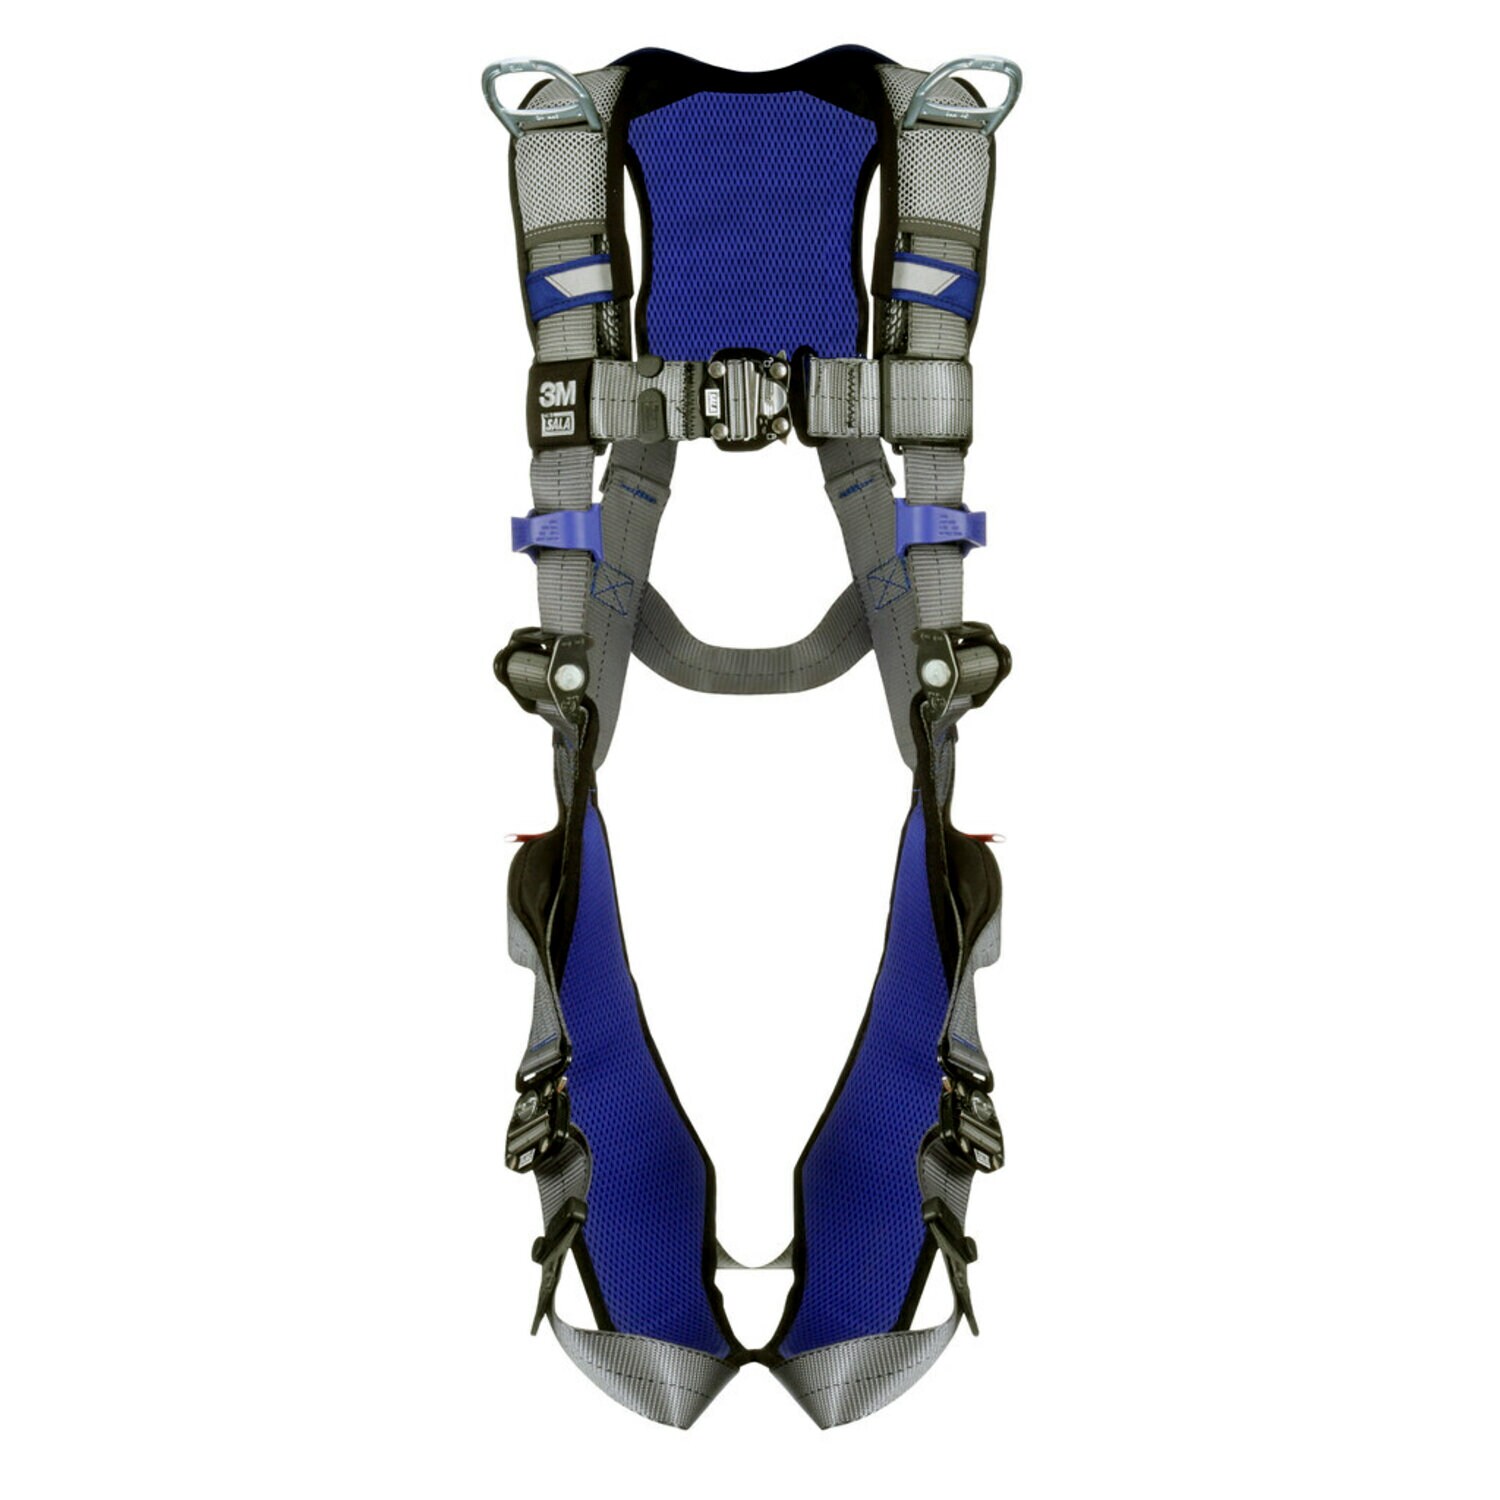 7012817900 - 3M DBI-SALA ExoFit X200 Comfort Vest Retrieval Safety Harness 1402147, Large